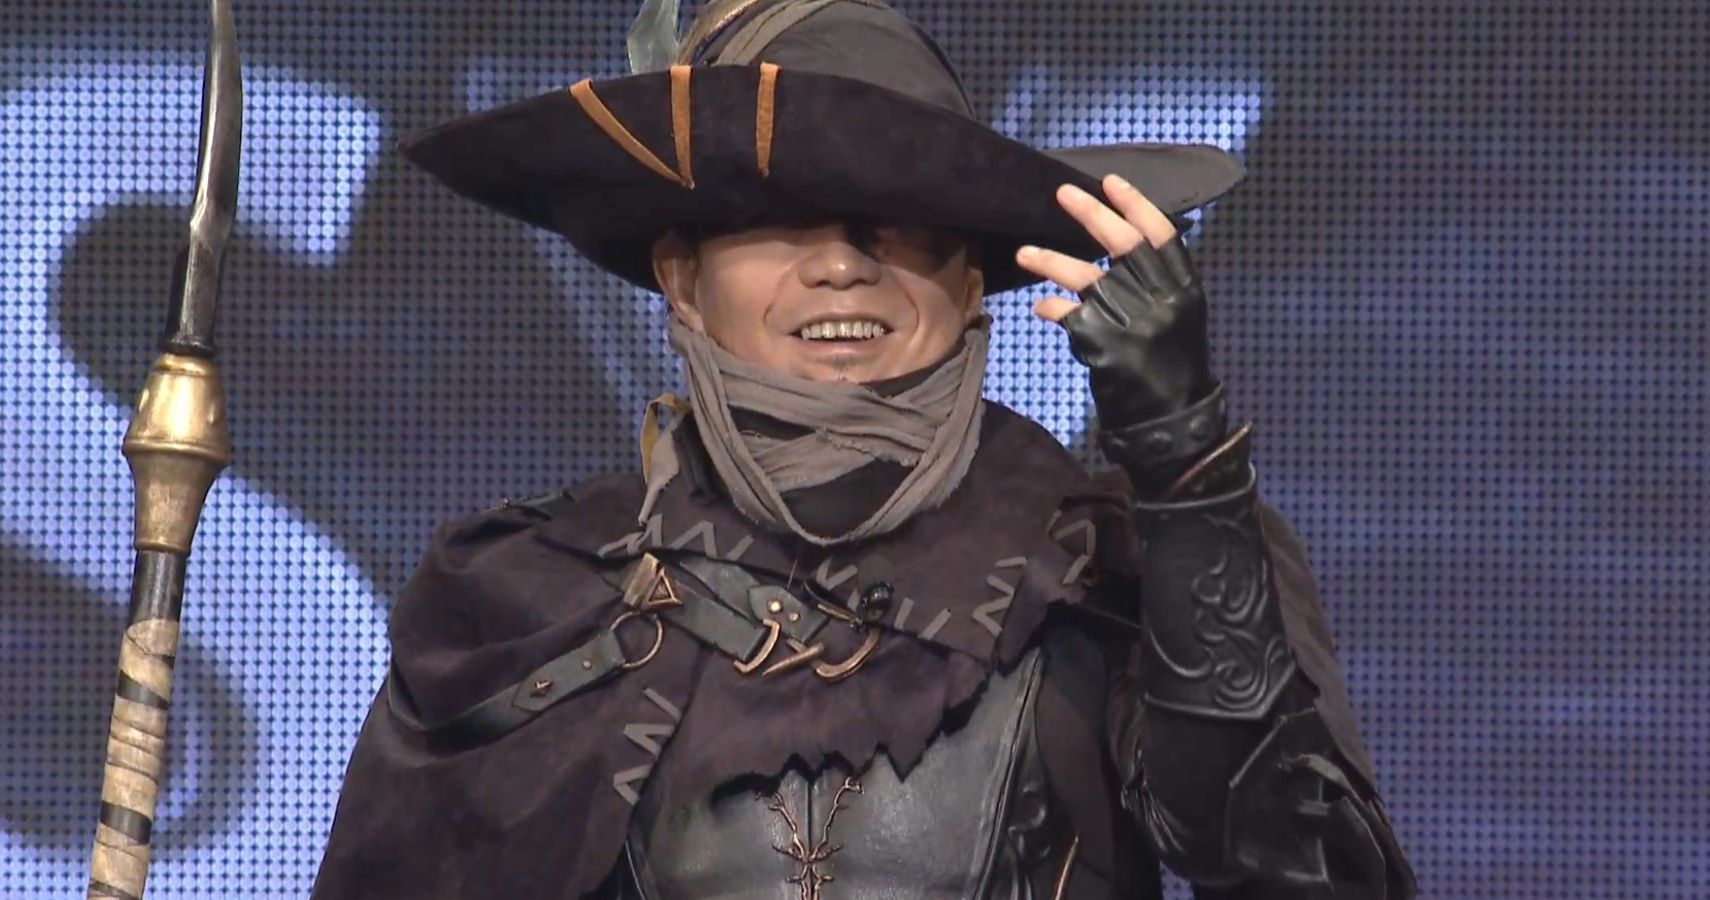 Final Fantasy 14 director and producer Naoki Yoshida cosplays the new Endwalker job, Reaper